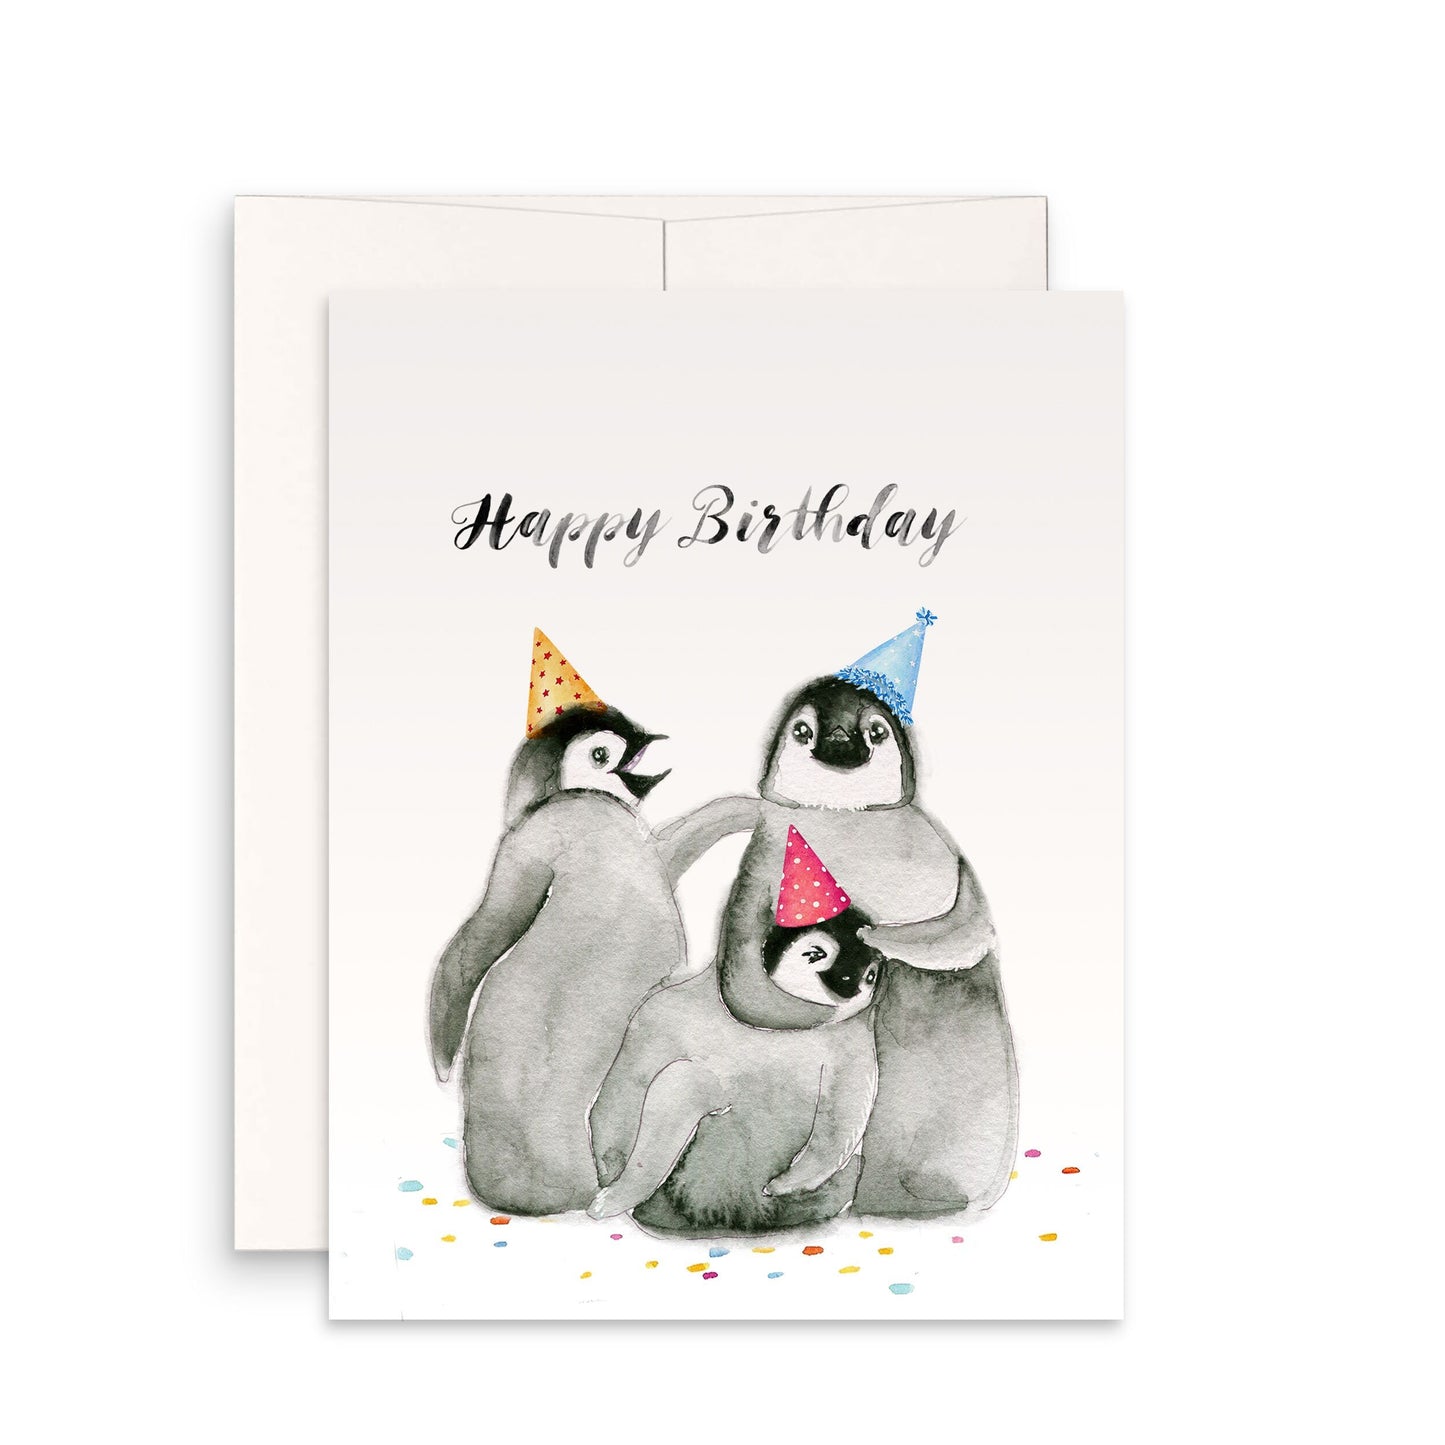 Baby Penguins Cute Birthday Card For Friends - Liyana Studio Greeting Cards Handmade